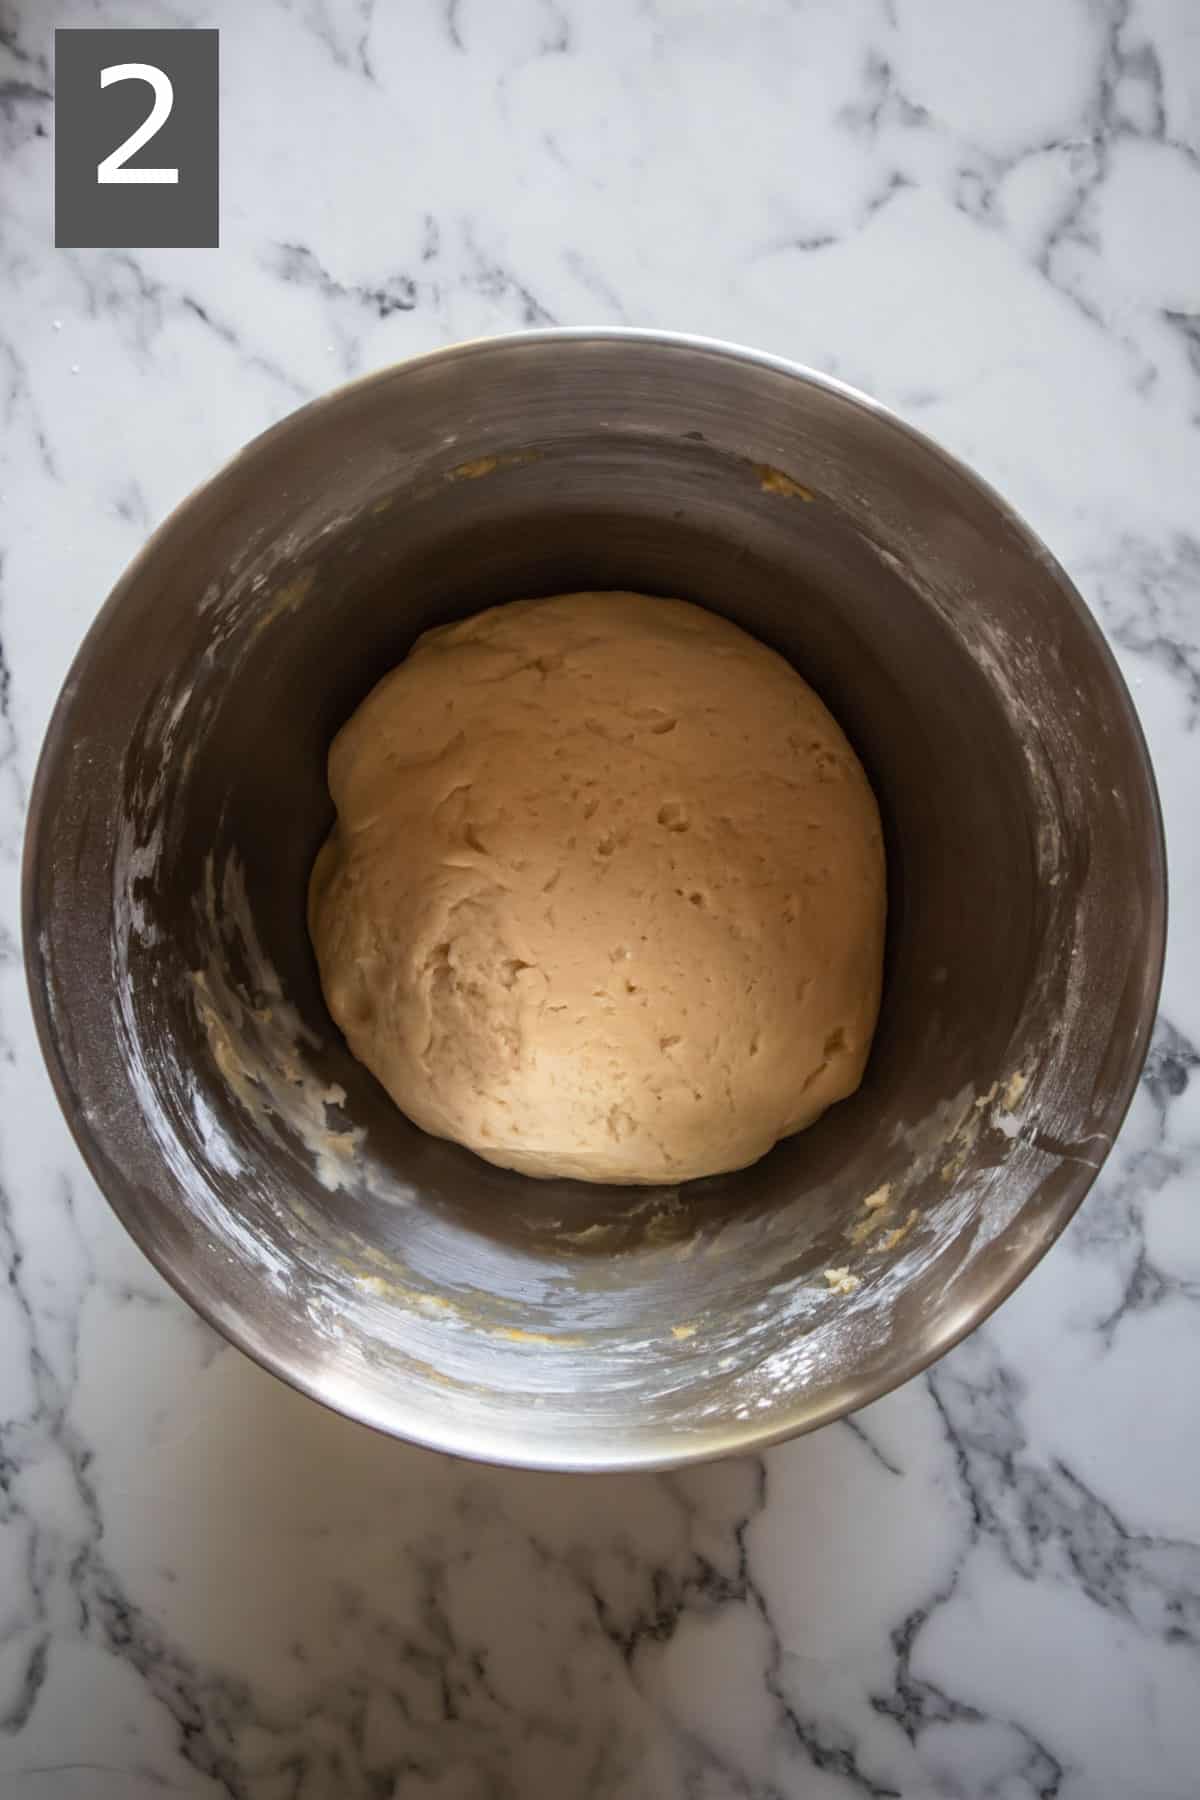 Brioche dough in a mixing bowl.